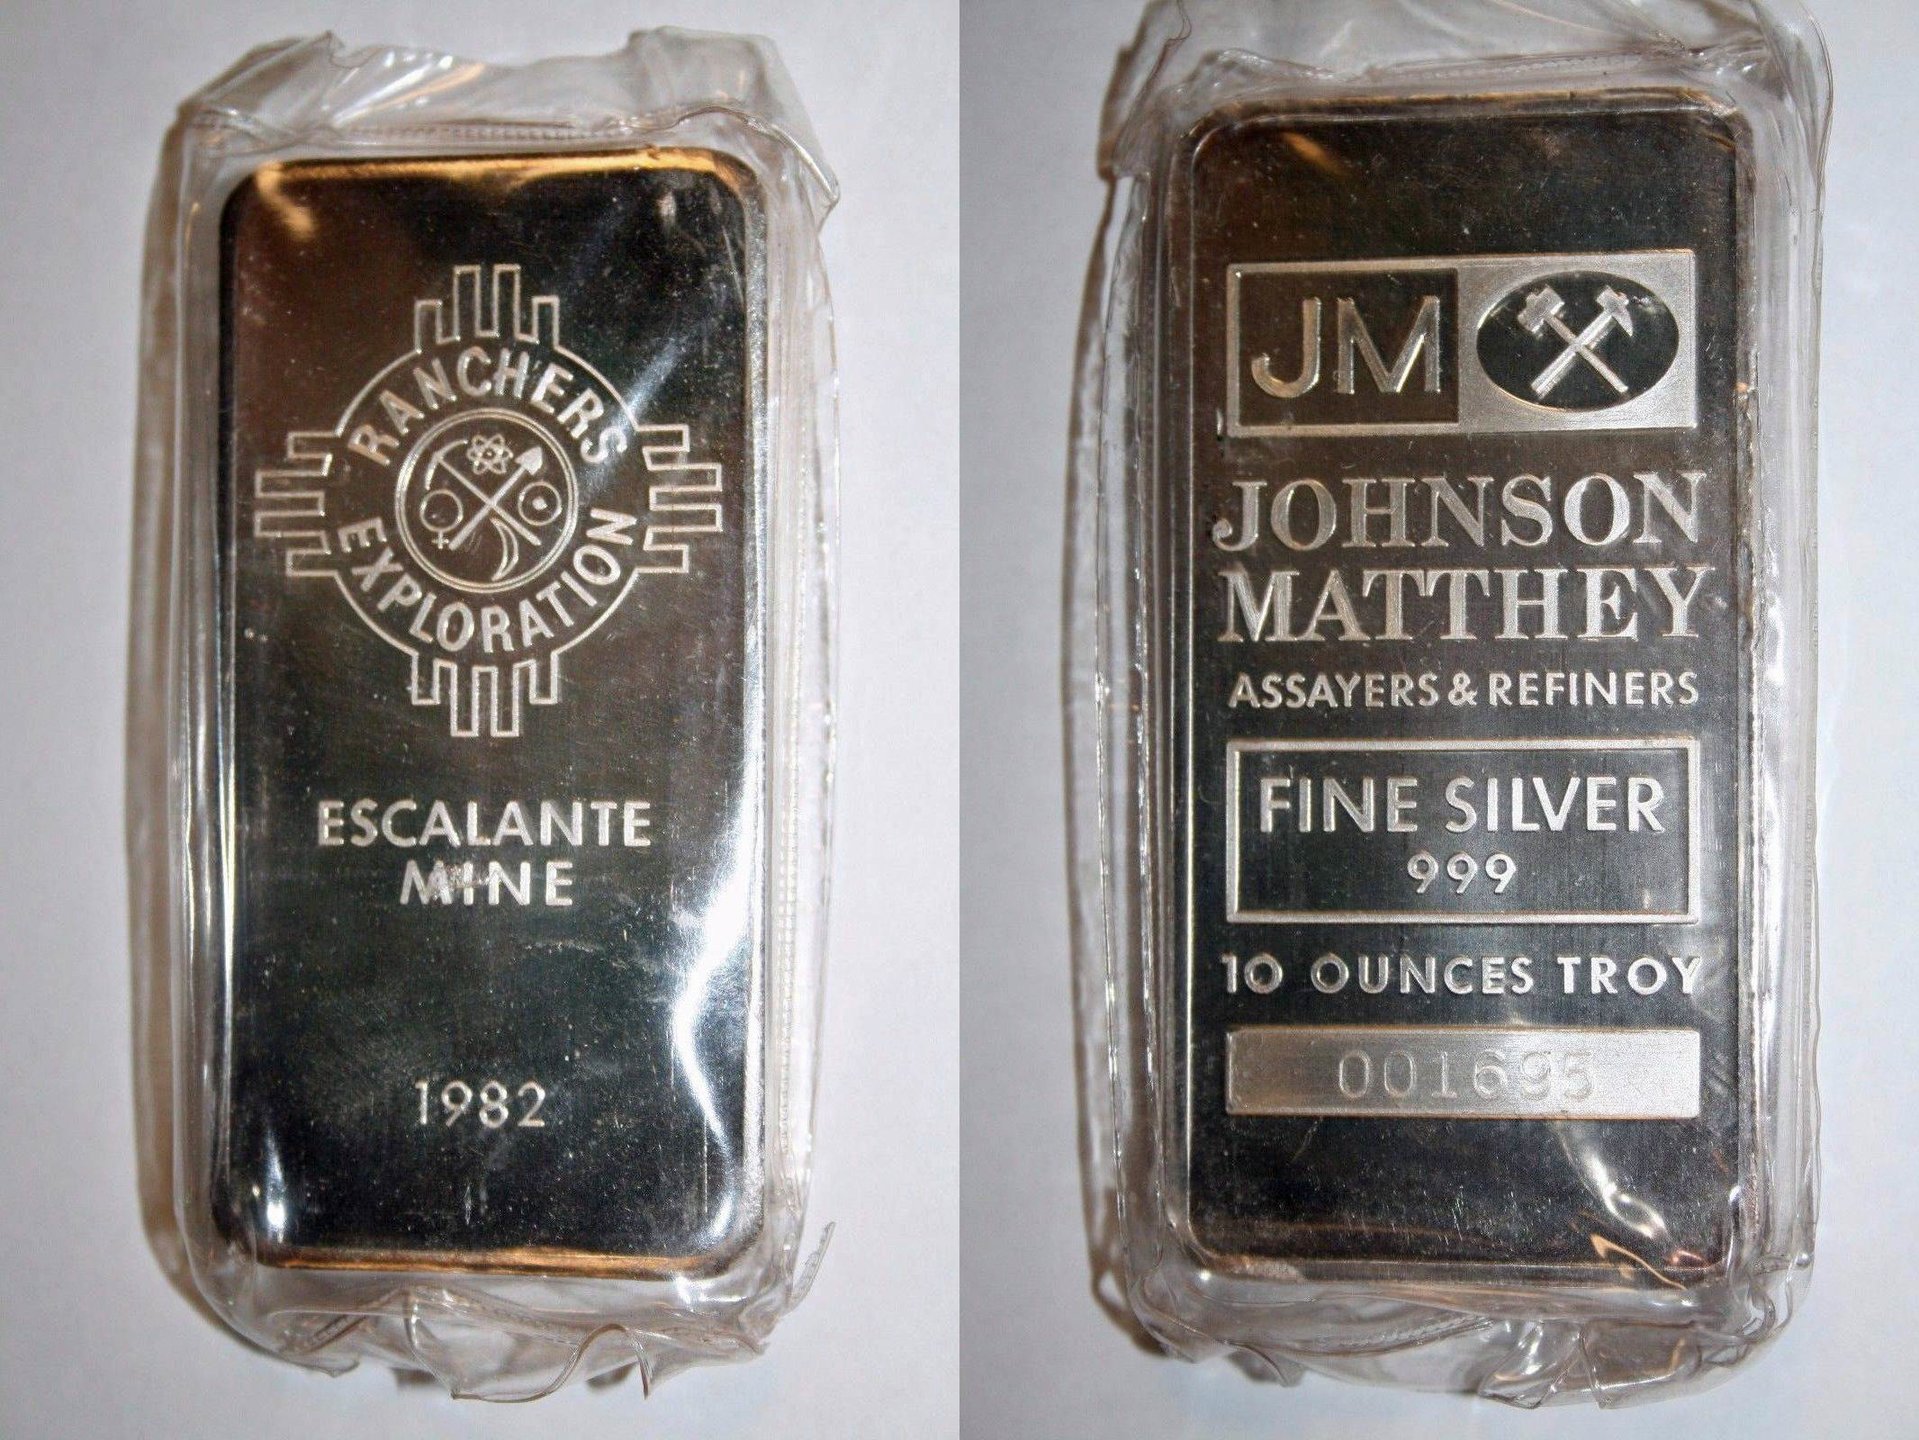 JM Ranchers Exploration Escalante Mine 10 oz silver bar combined.jpg